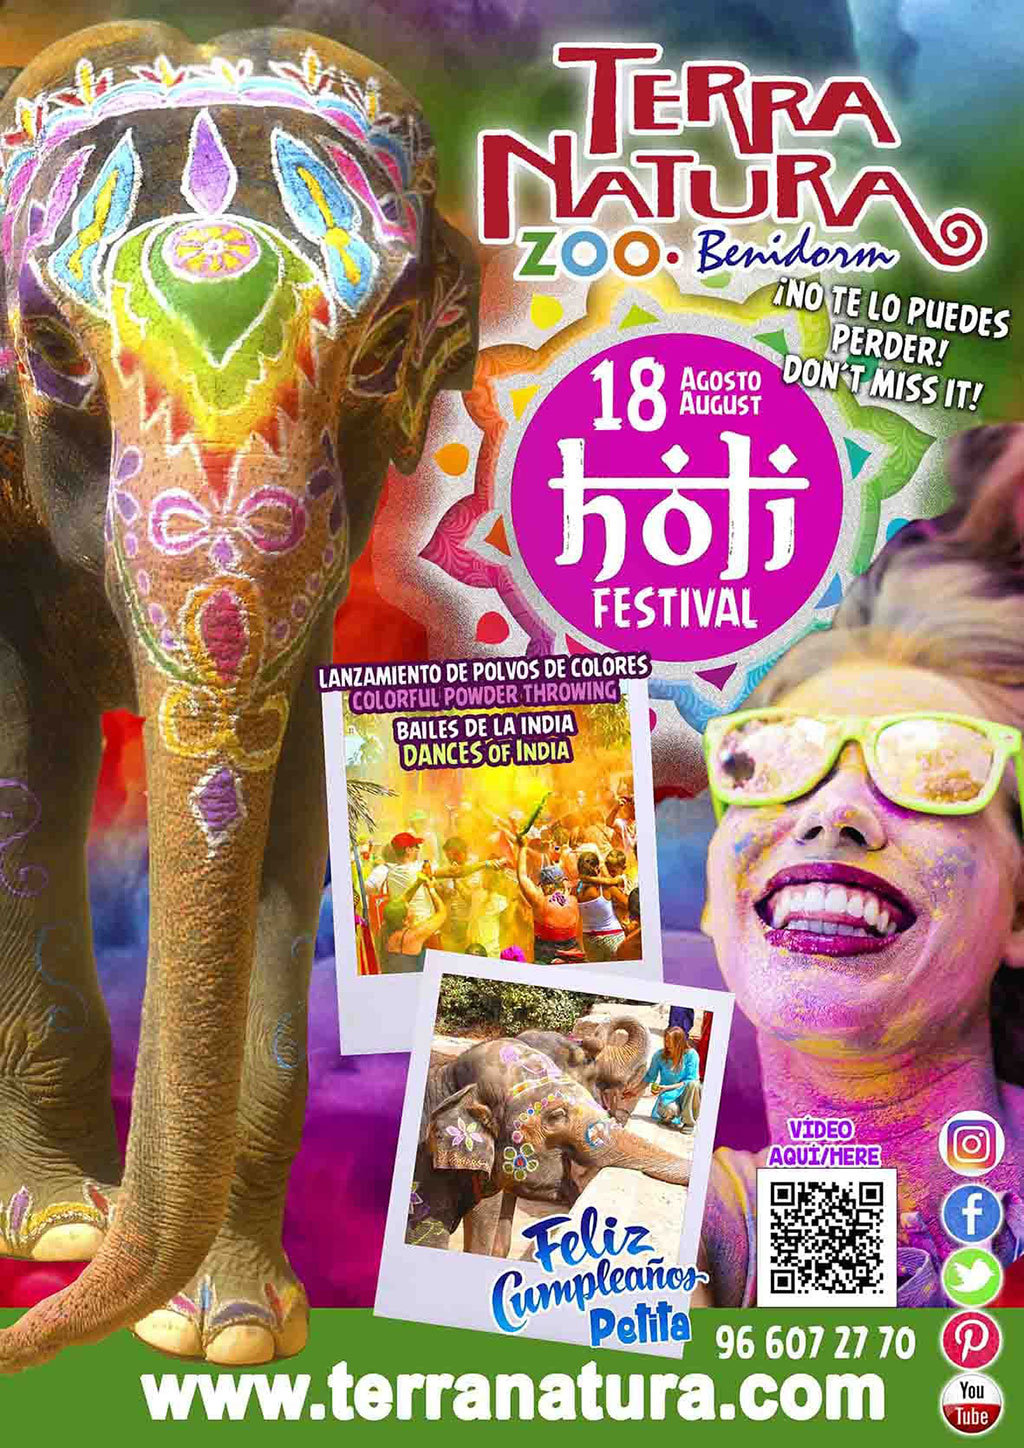 Holi Festival 2018